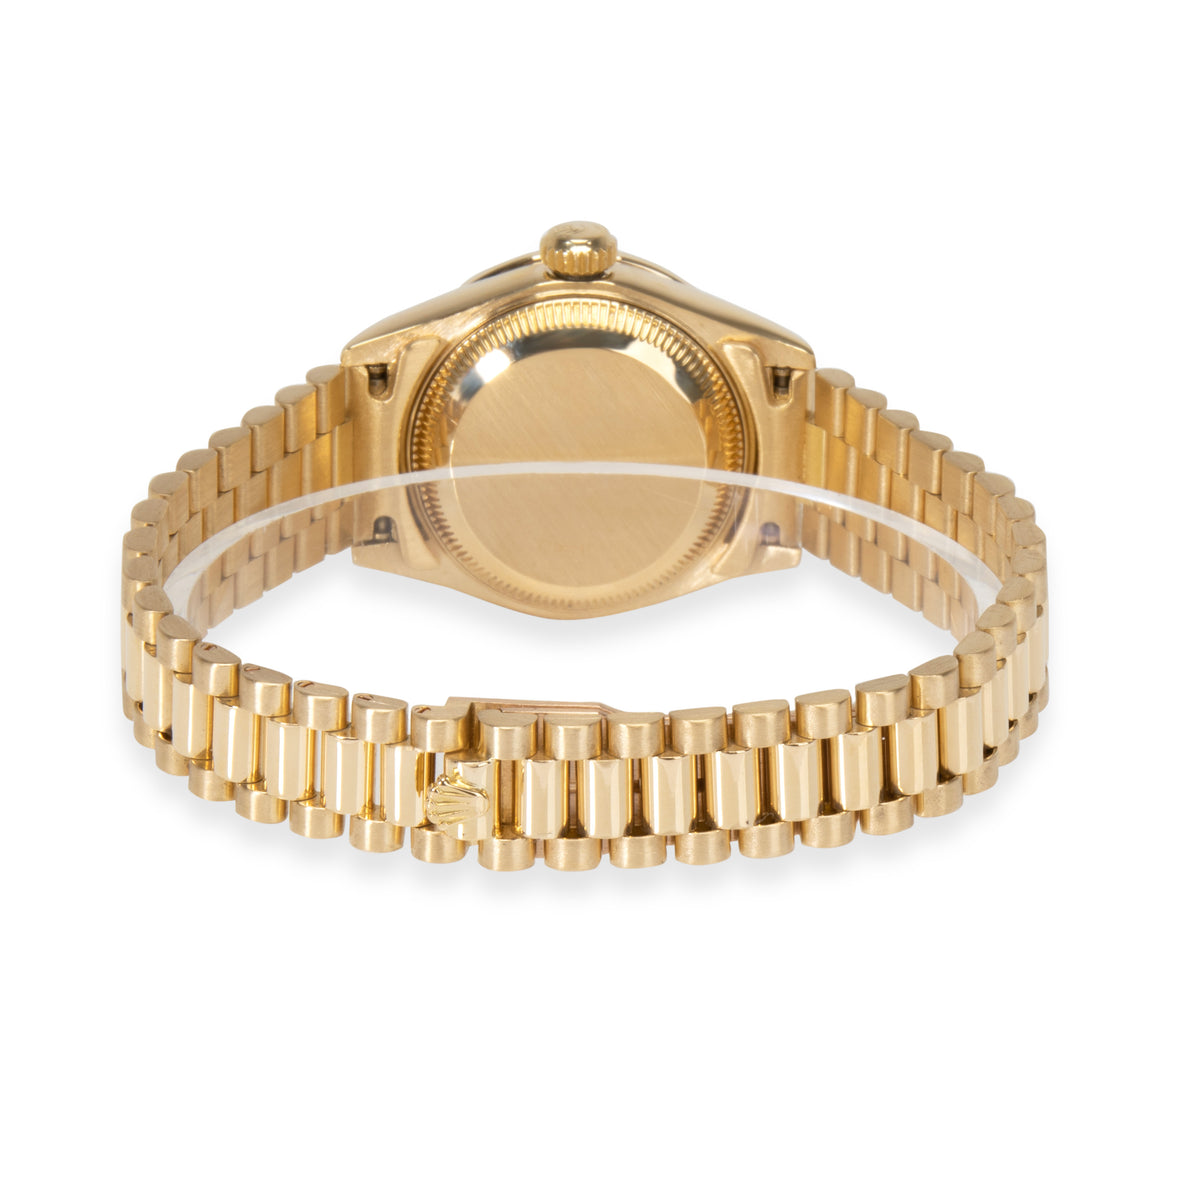 Rolex Datejust 69158 Women's Watch in 18kt Yellow Gold